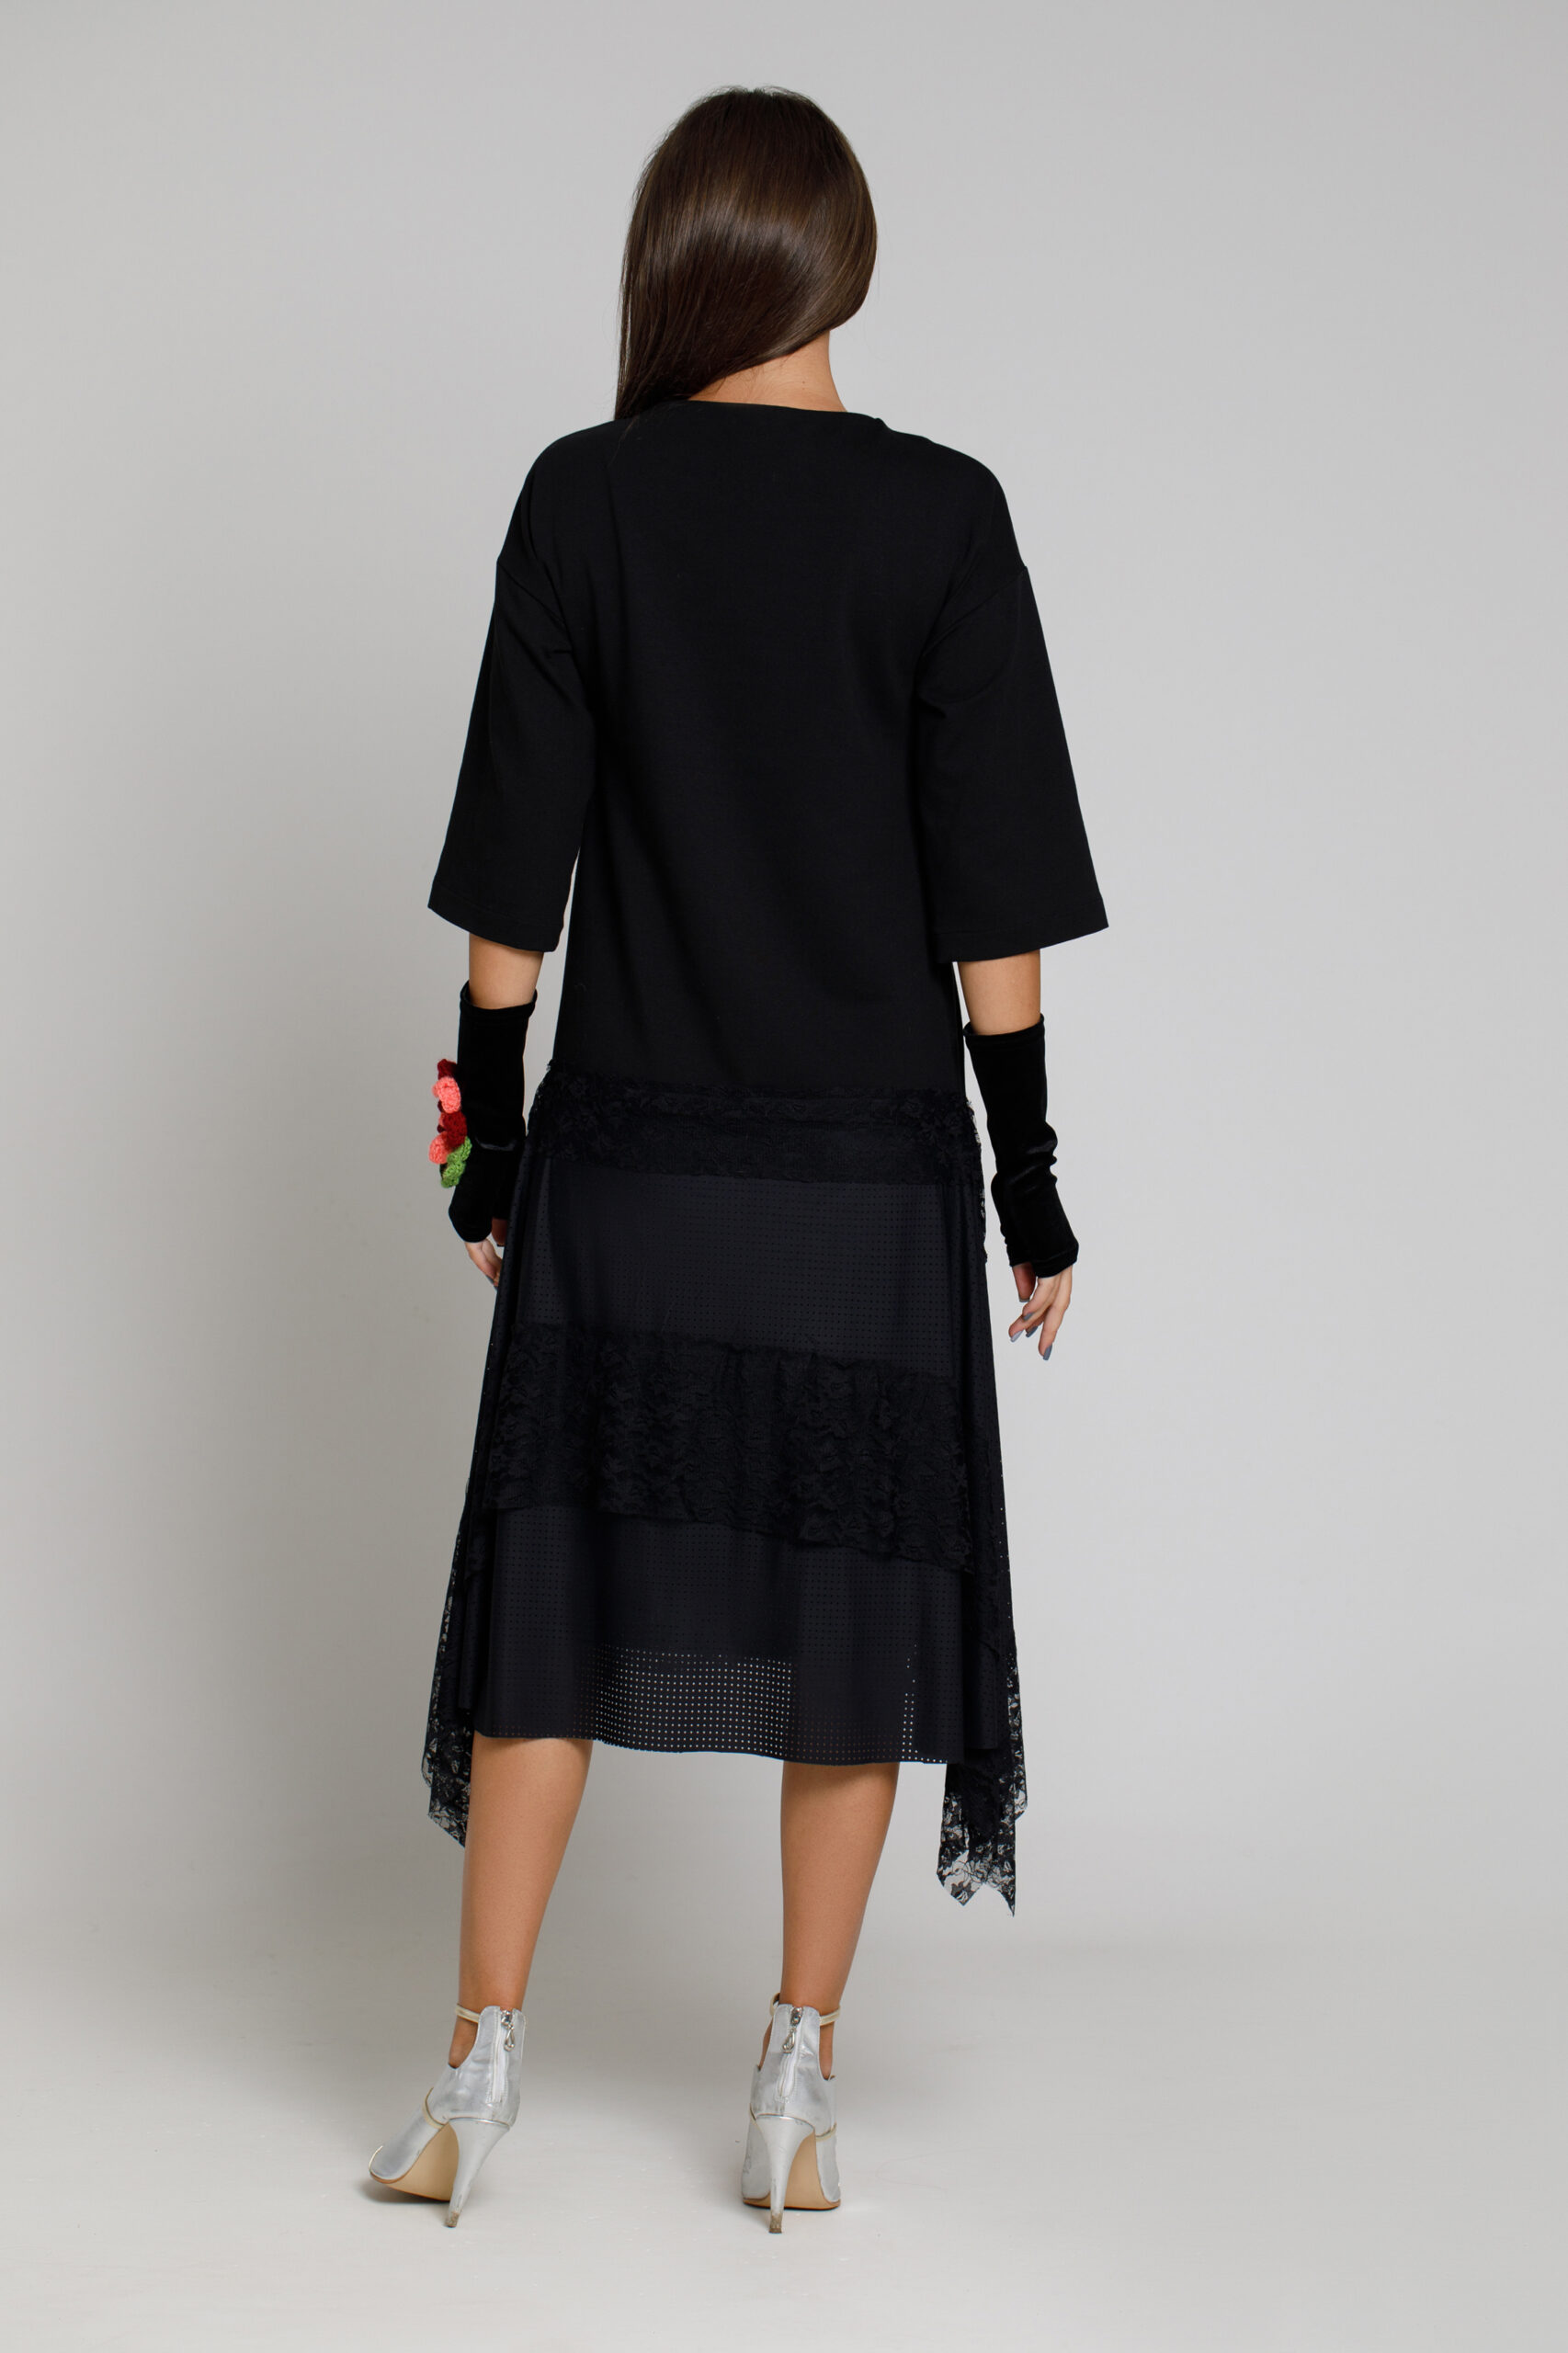 ALDA Black asymmetric dress with lace border. Natural fabrics, original design, handmade embroidery